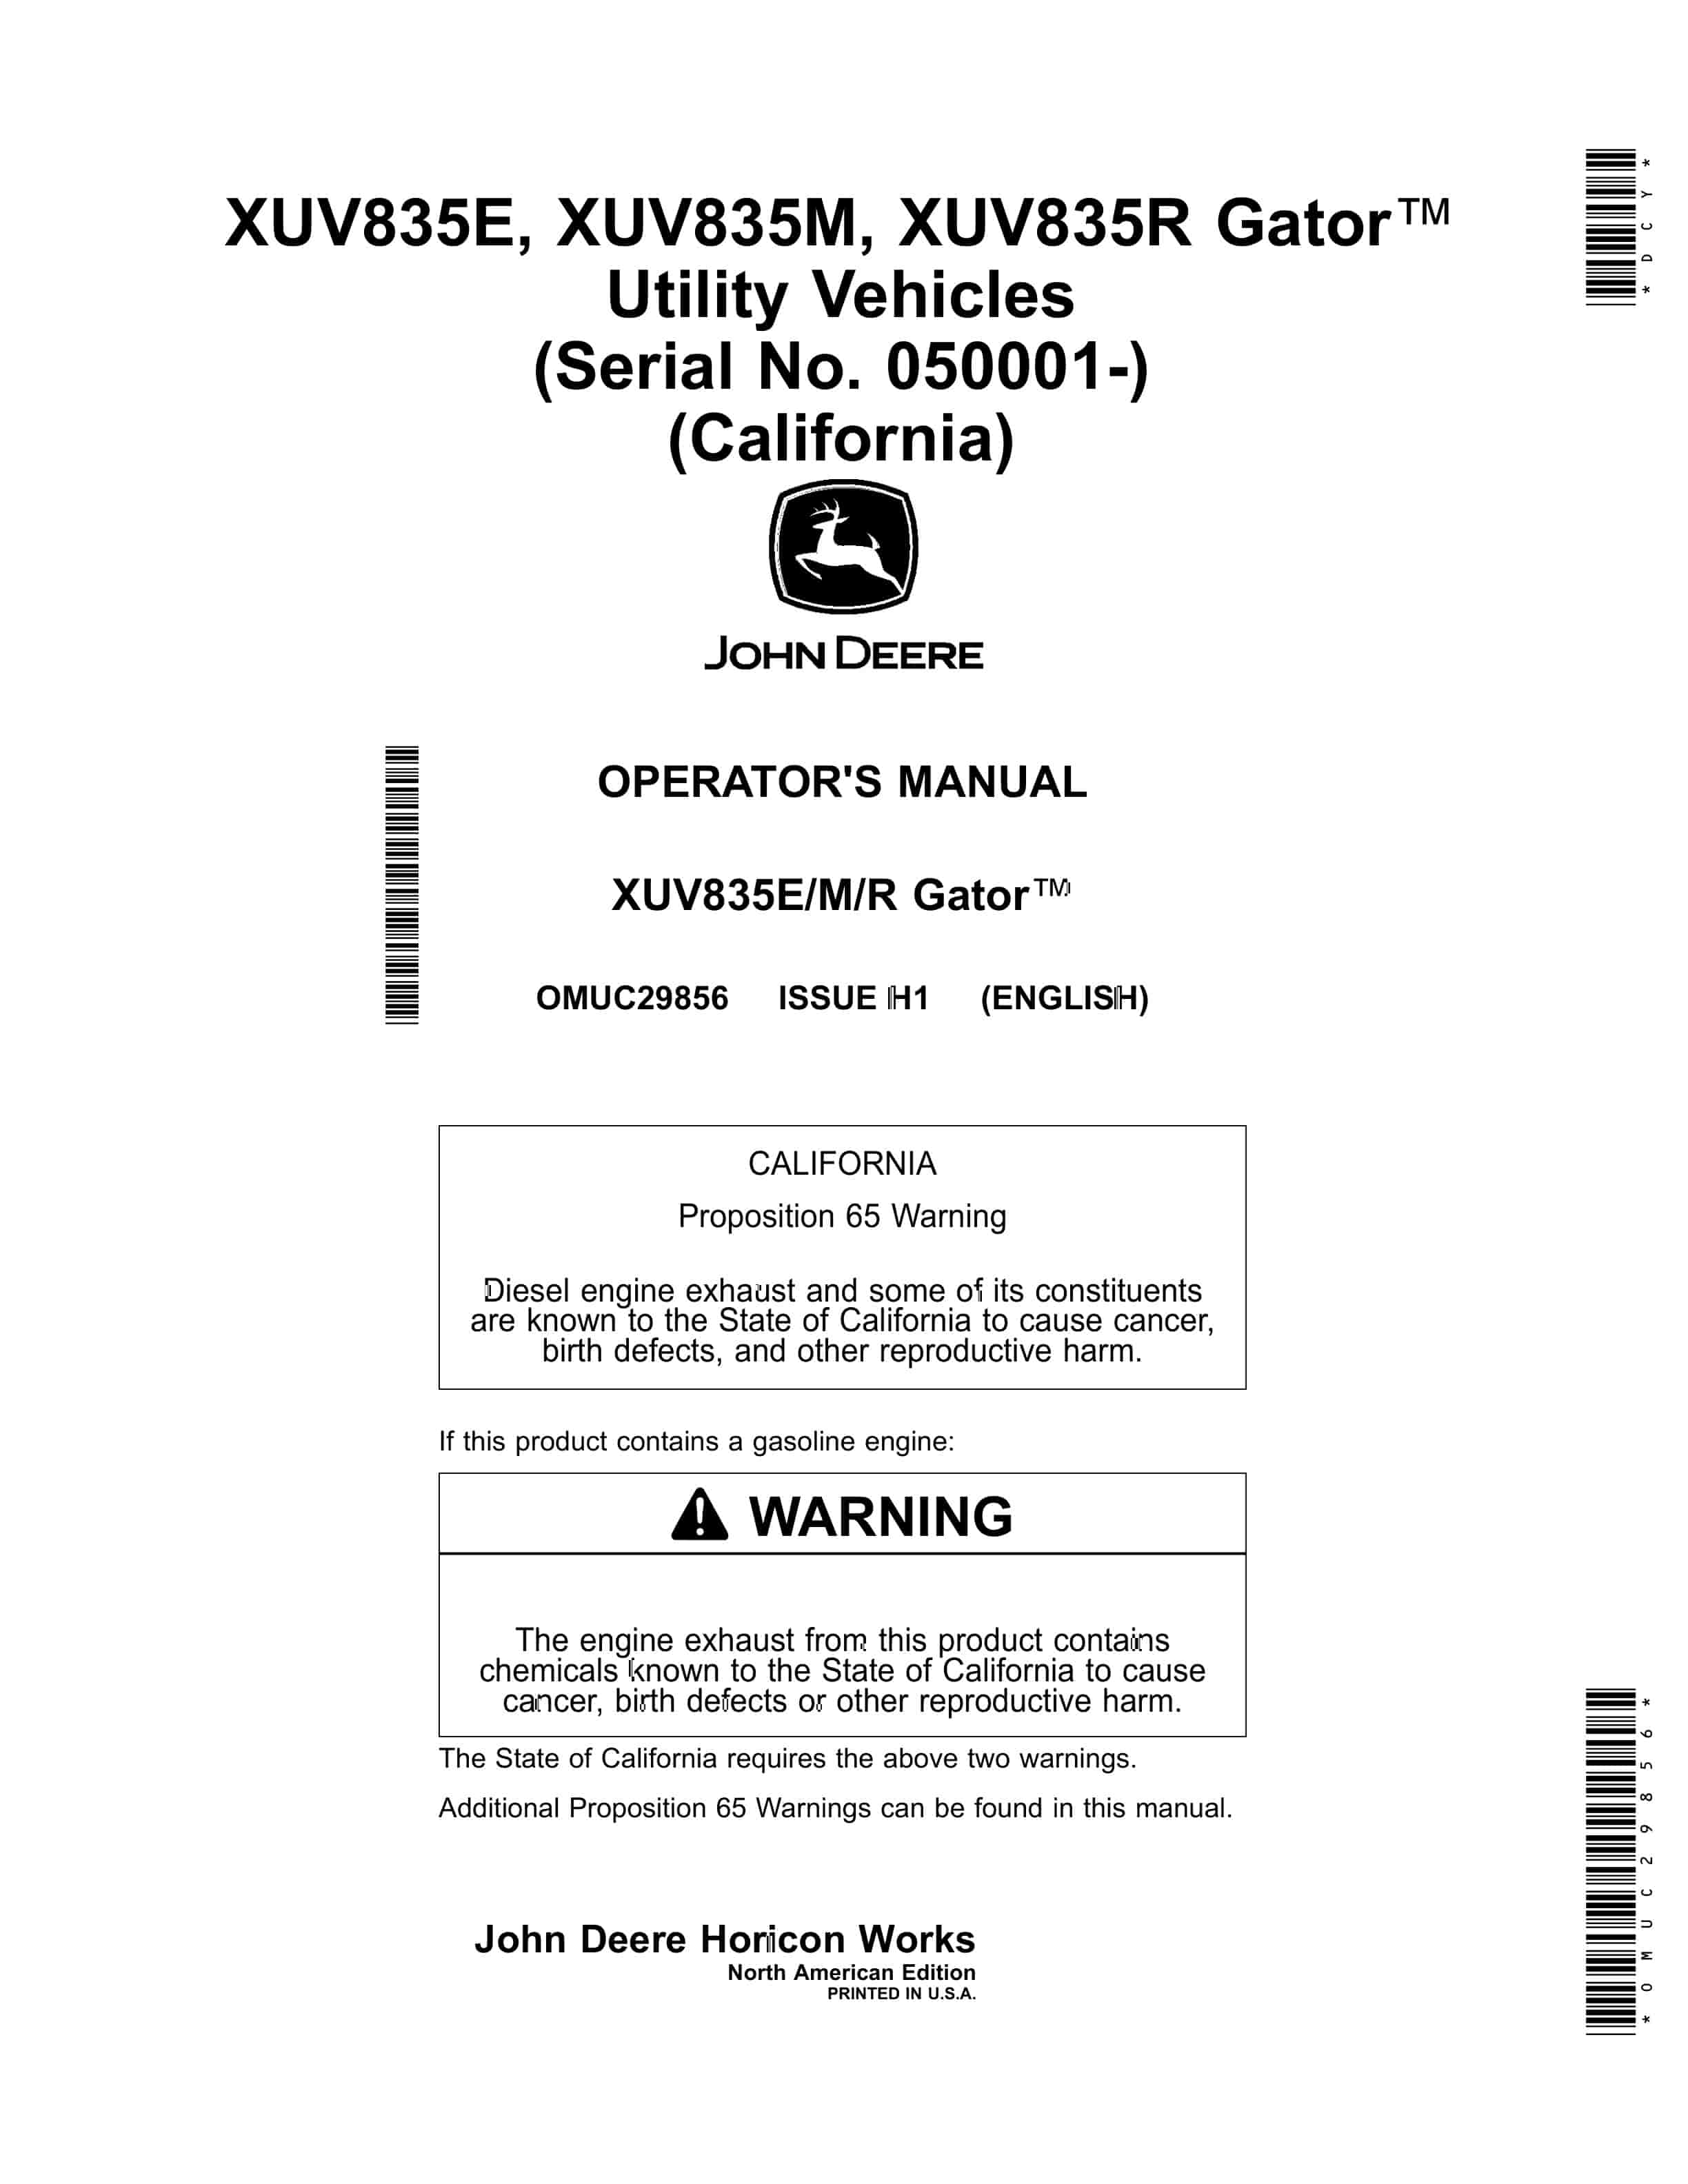 John Deere XUV835E XUV835M XUV835R Gator Utility Vehicles Operator Manual OMUC29856 1